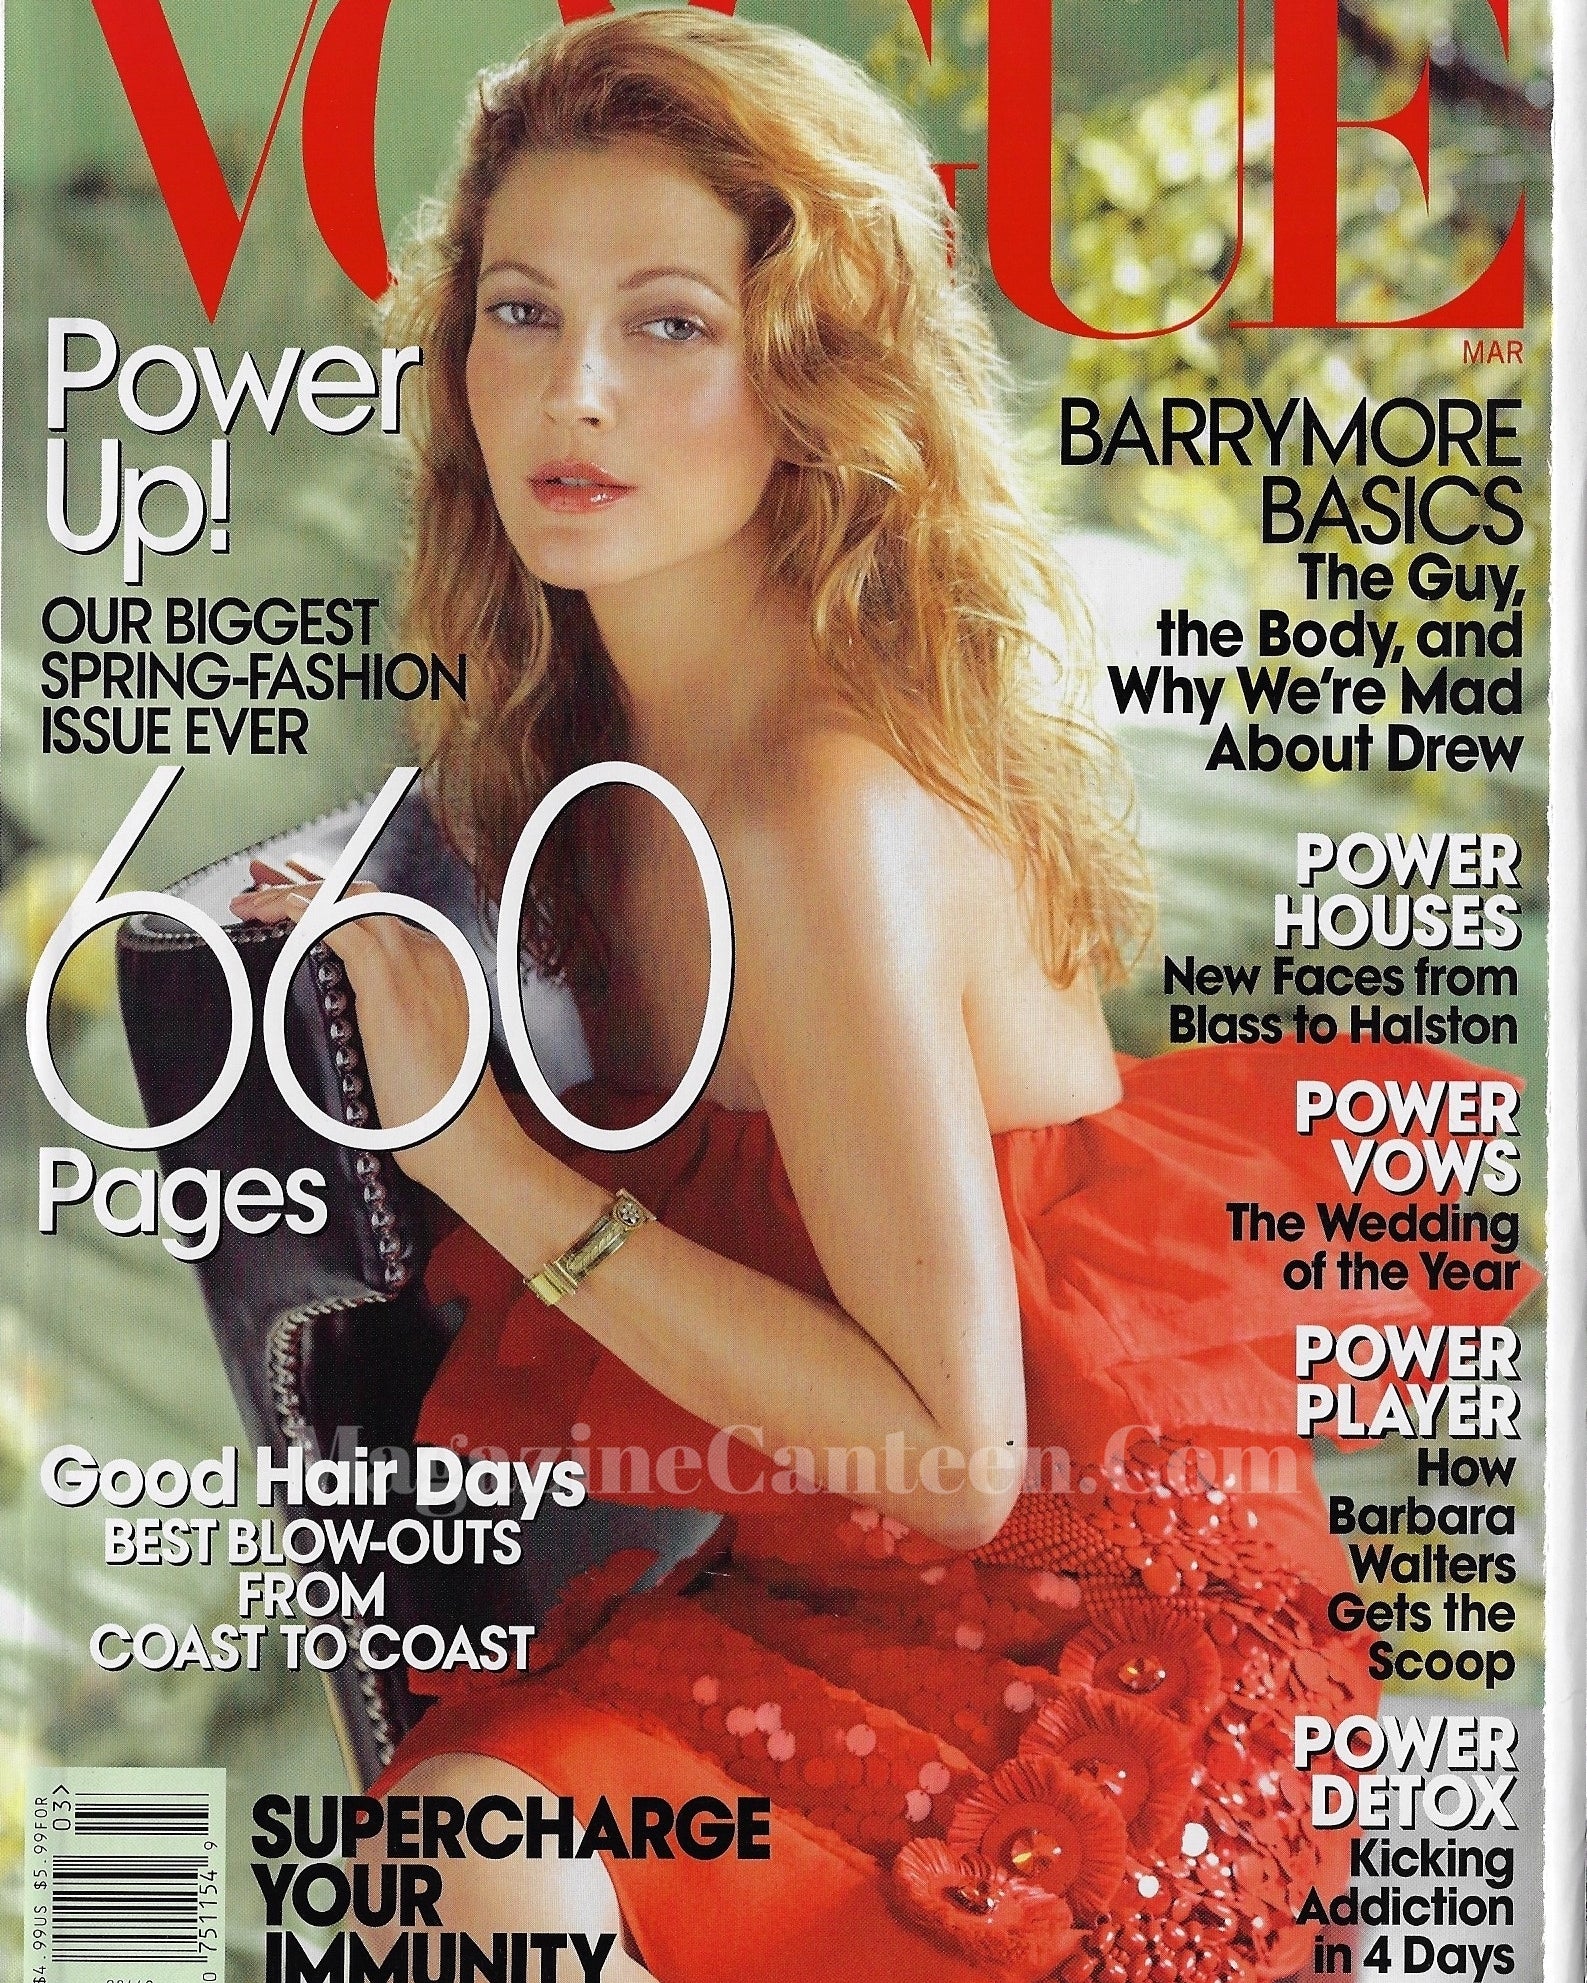 Vogue USA Magazine March 2008 - Drew Barrymore